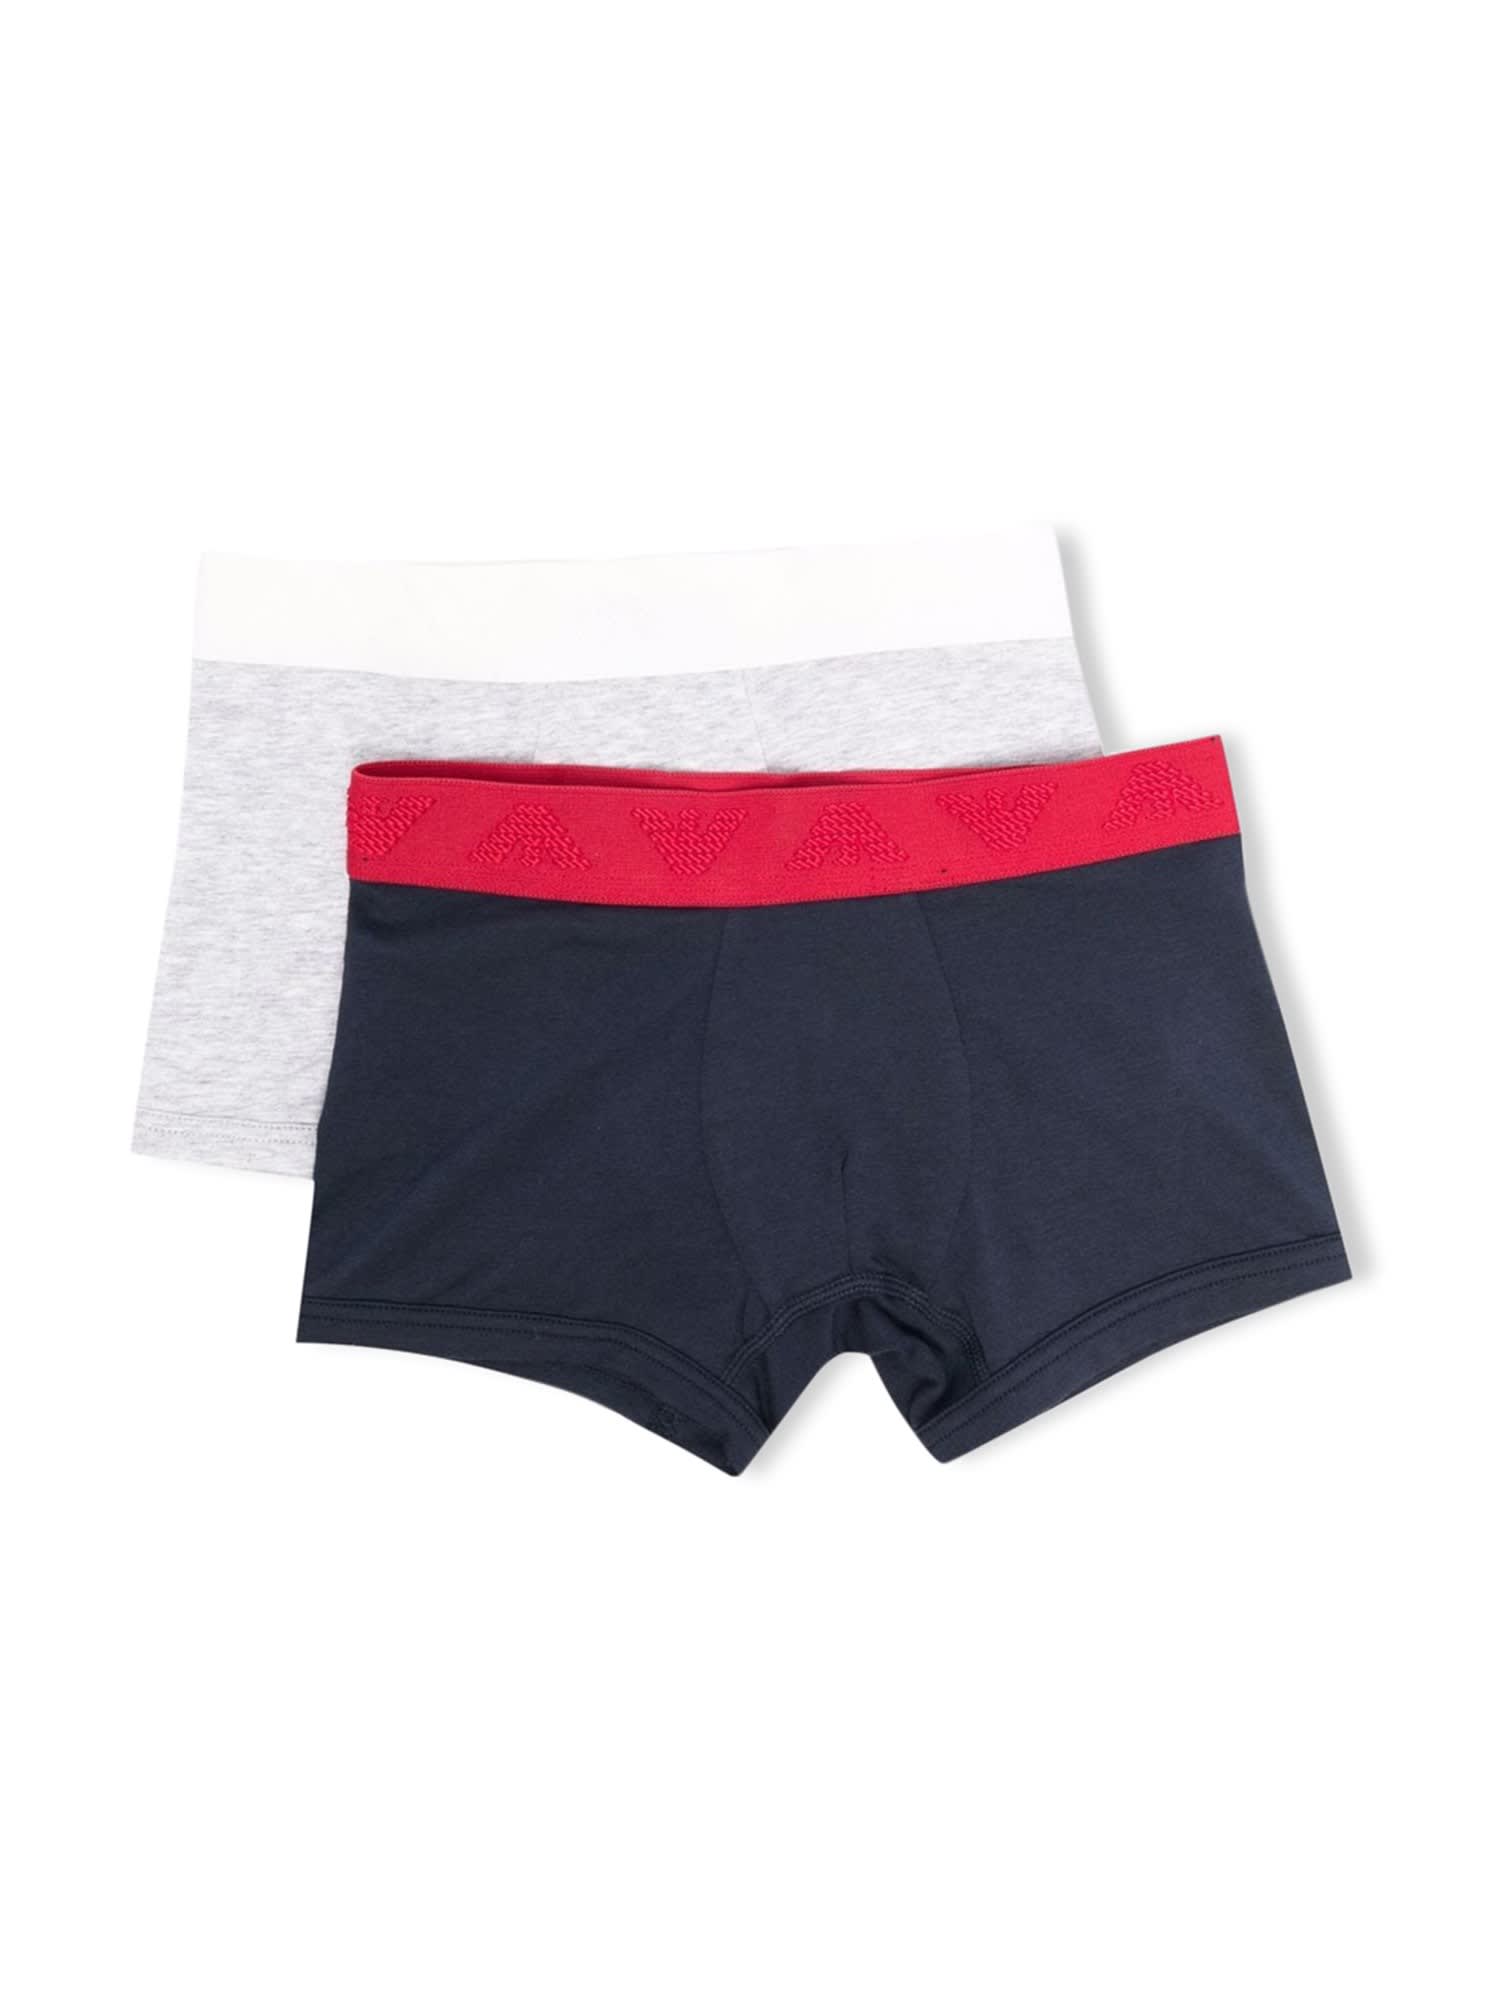 Emporio Armani Junior Underwear Set 2pack